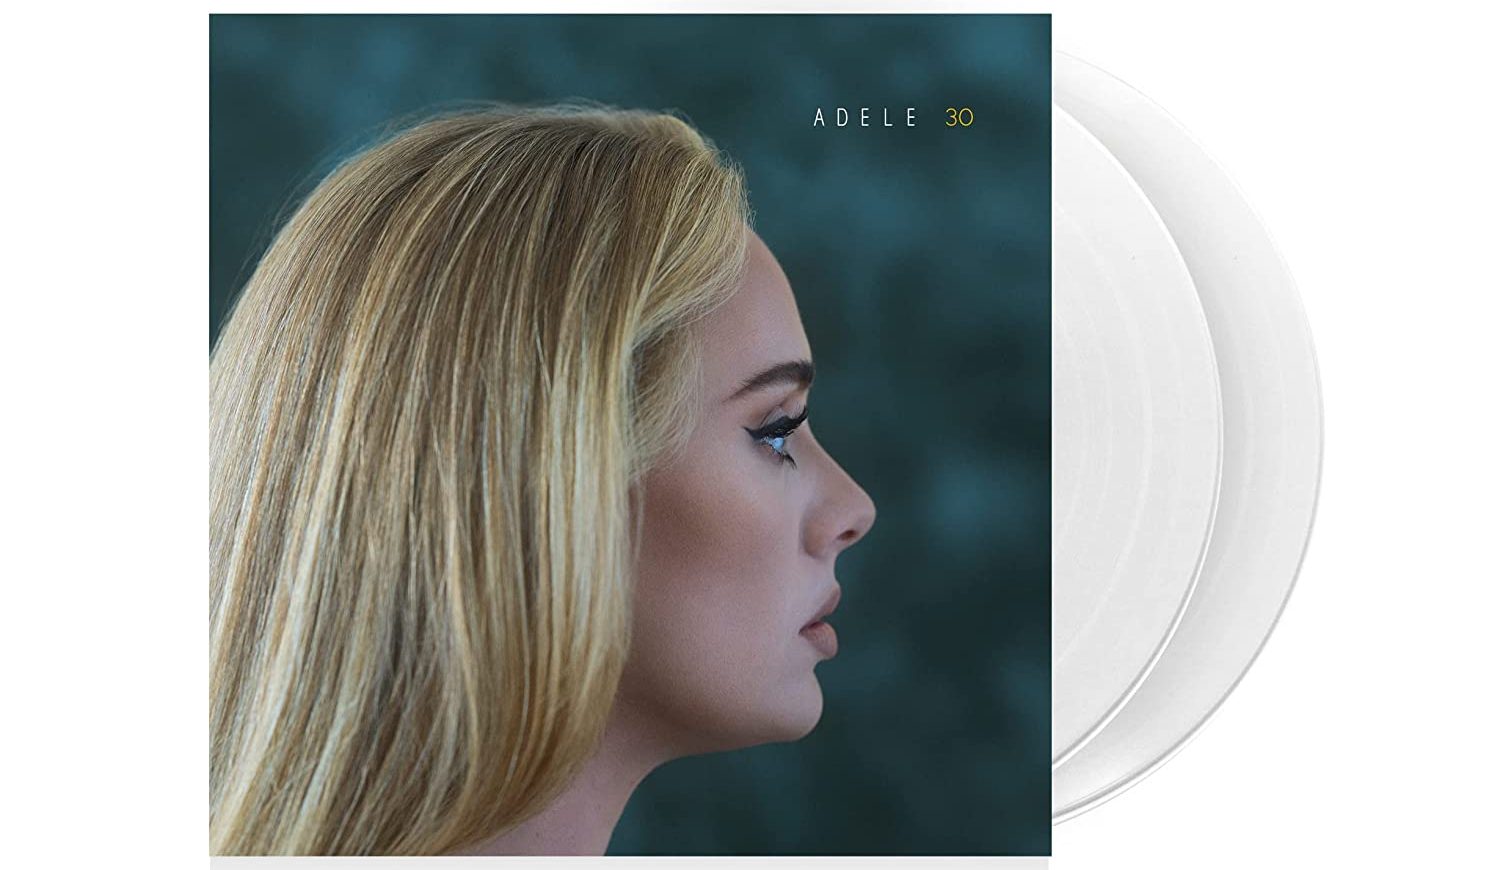 Adele’s New Album Sold Over 830K